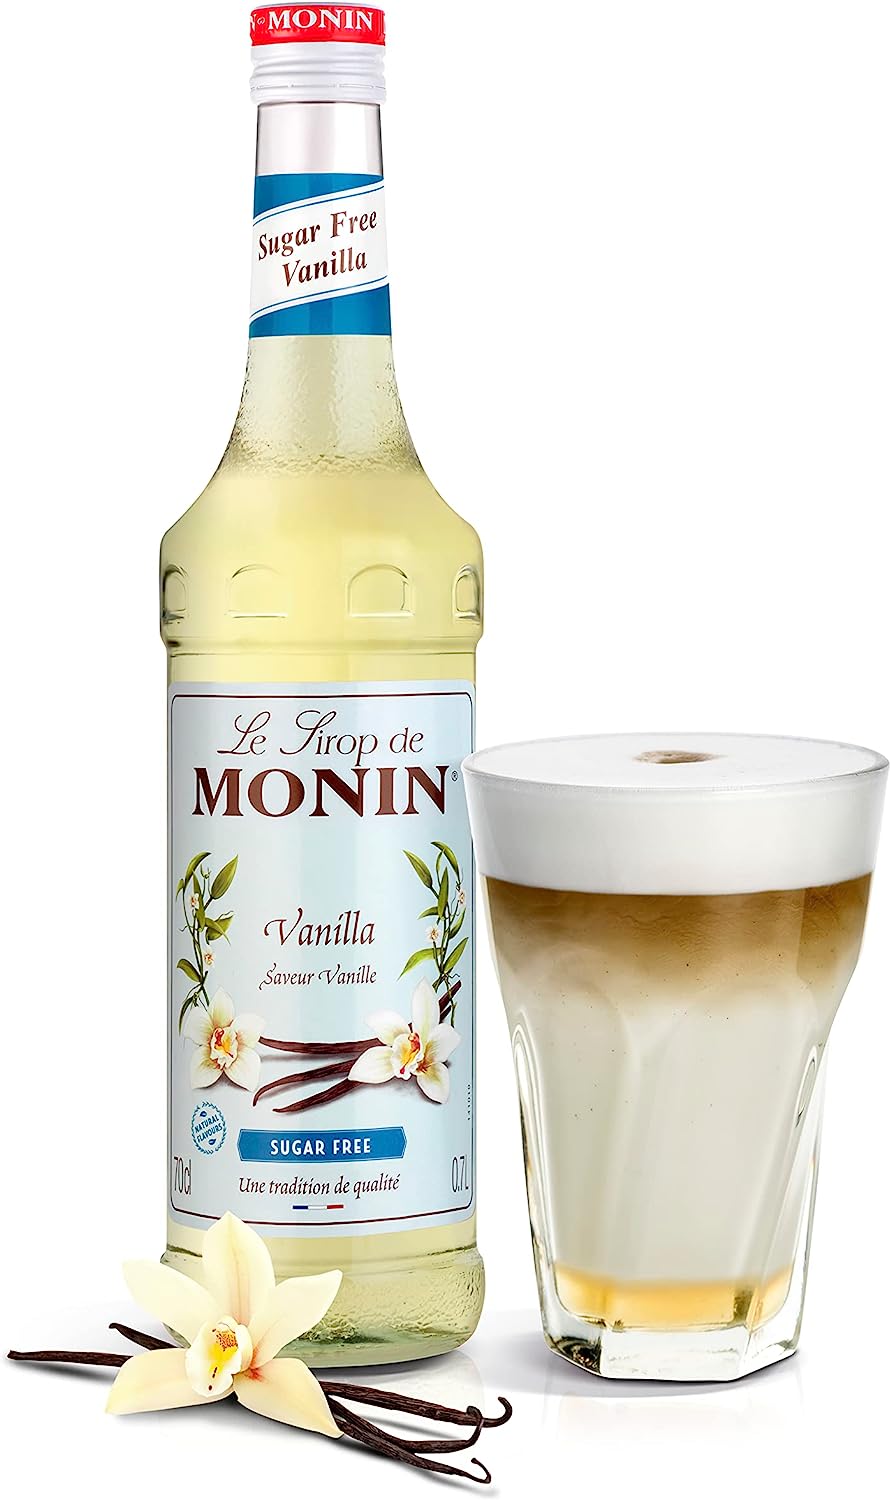 MONIN Premium Vanilla Sugar Free Syrup UK Review